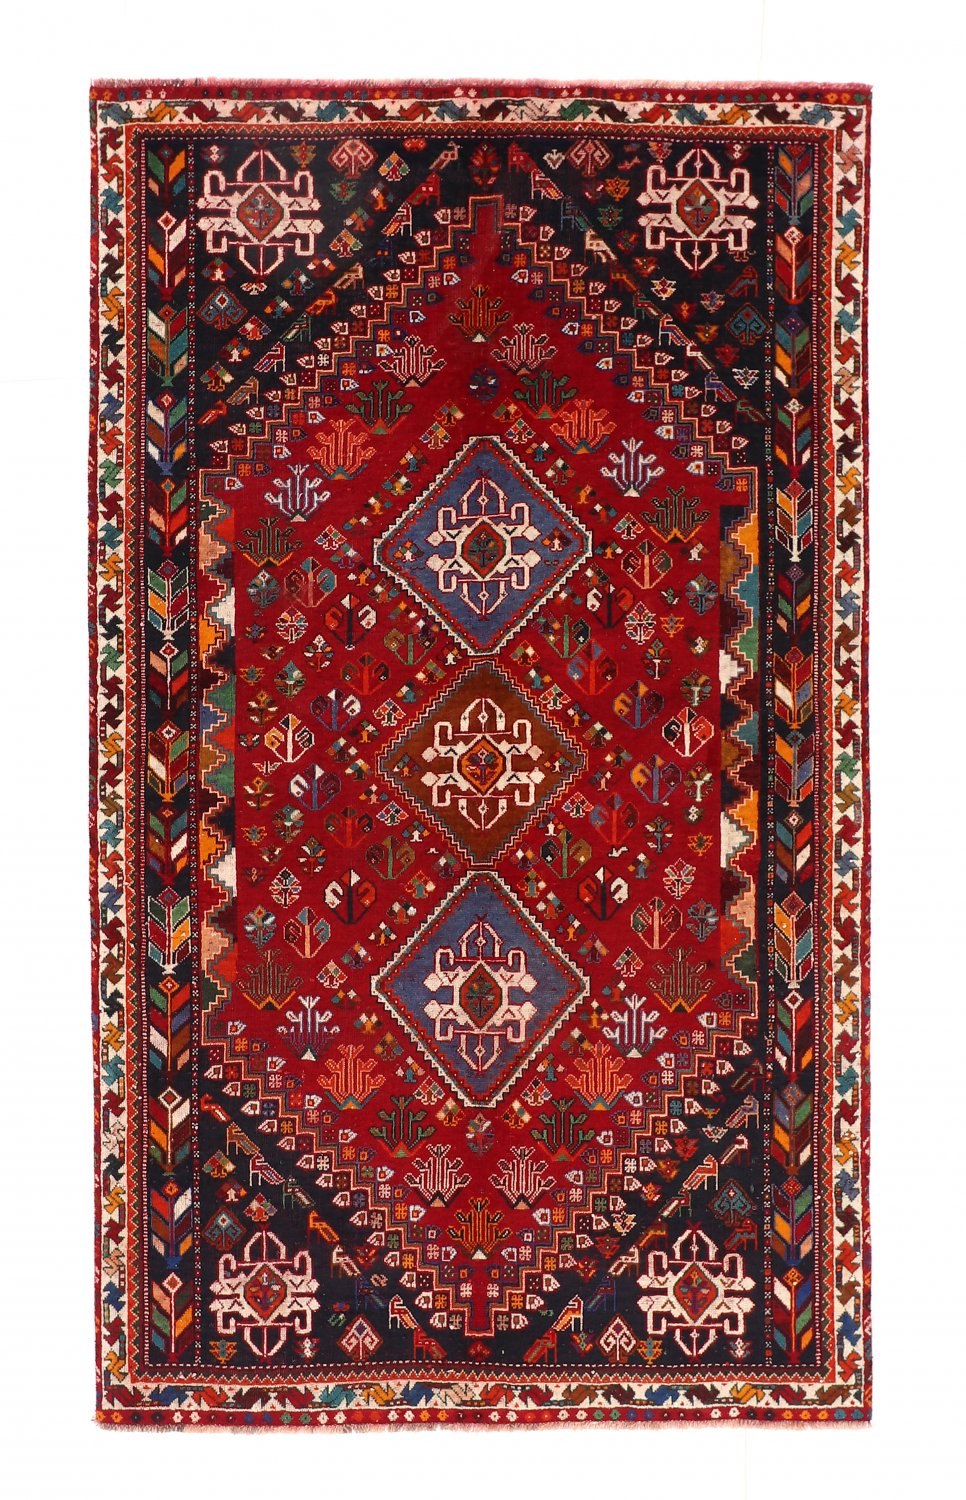 Persian Kilim 256 x 152 cm